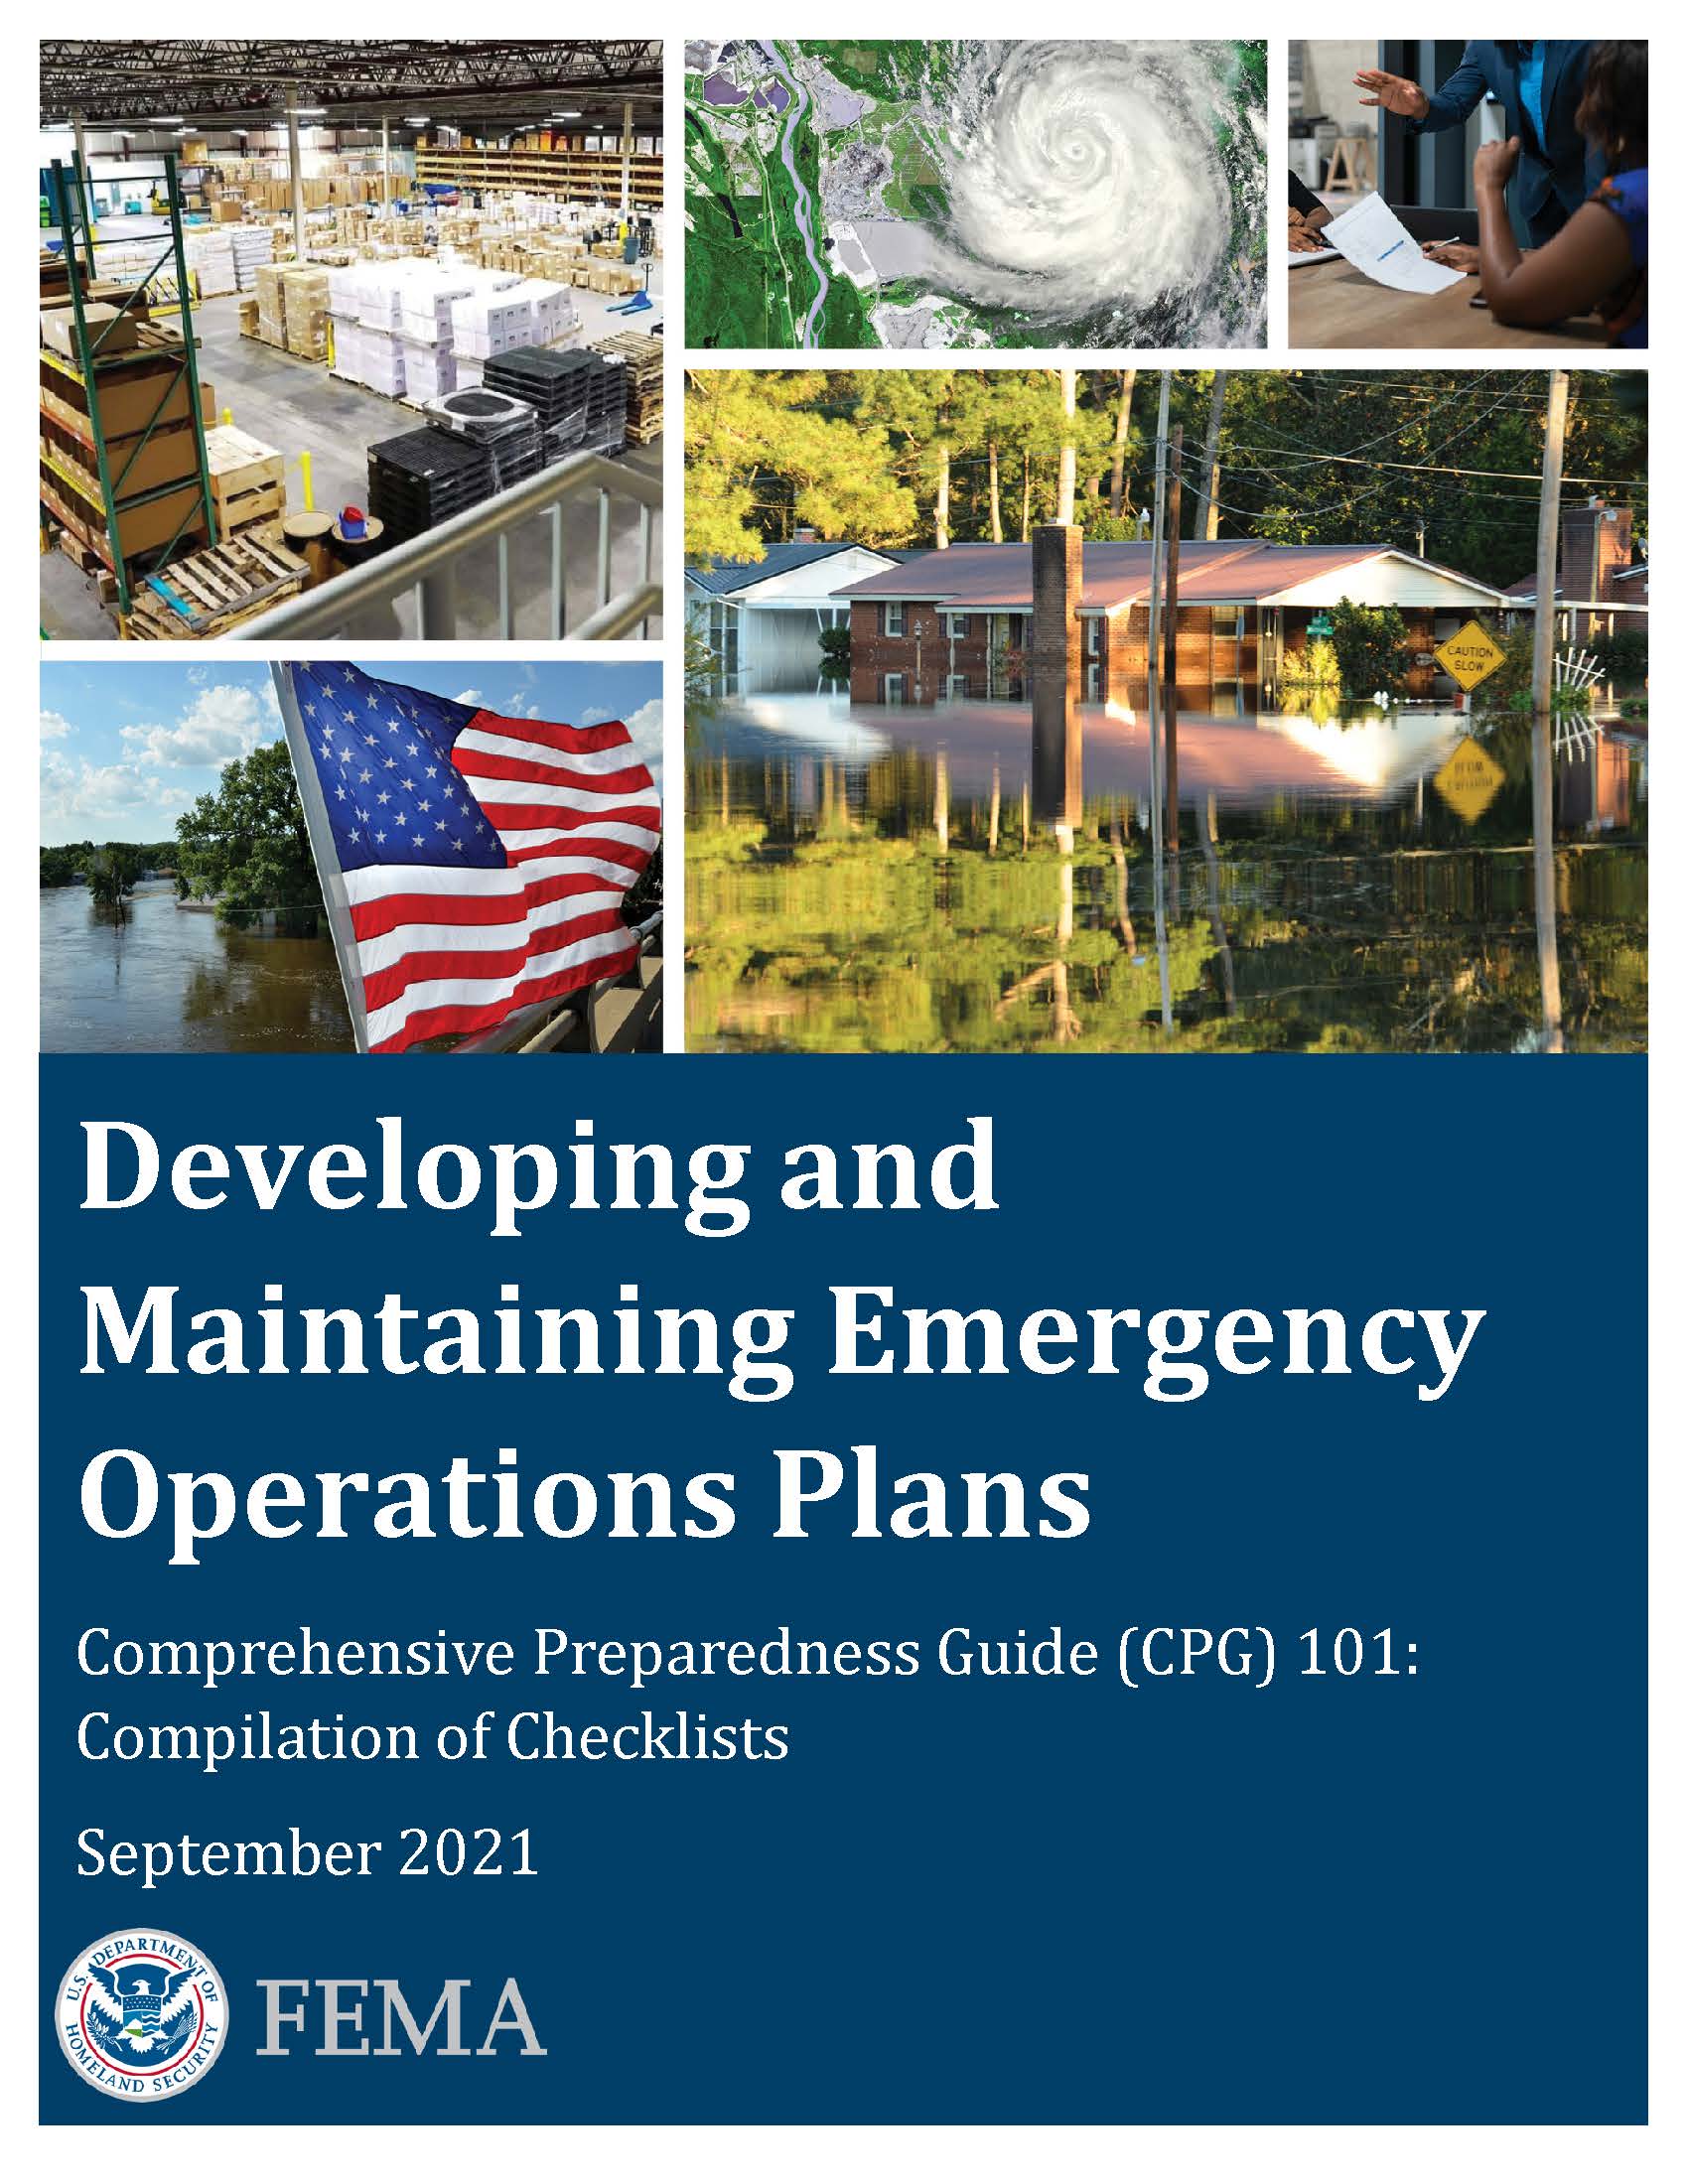 Comprehensive Preparedness Guide (CPG) 101 Webinar FEMA.gov